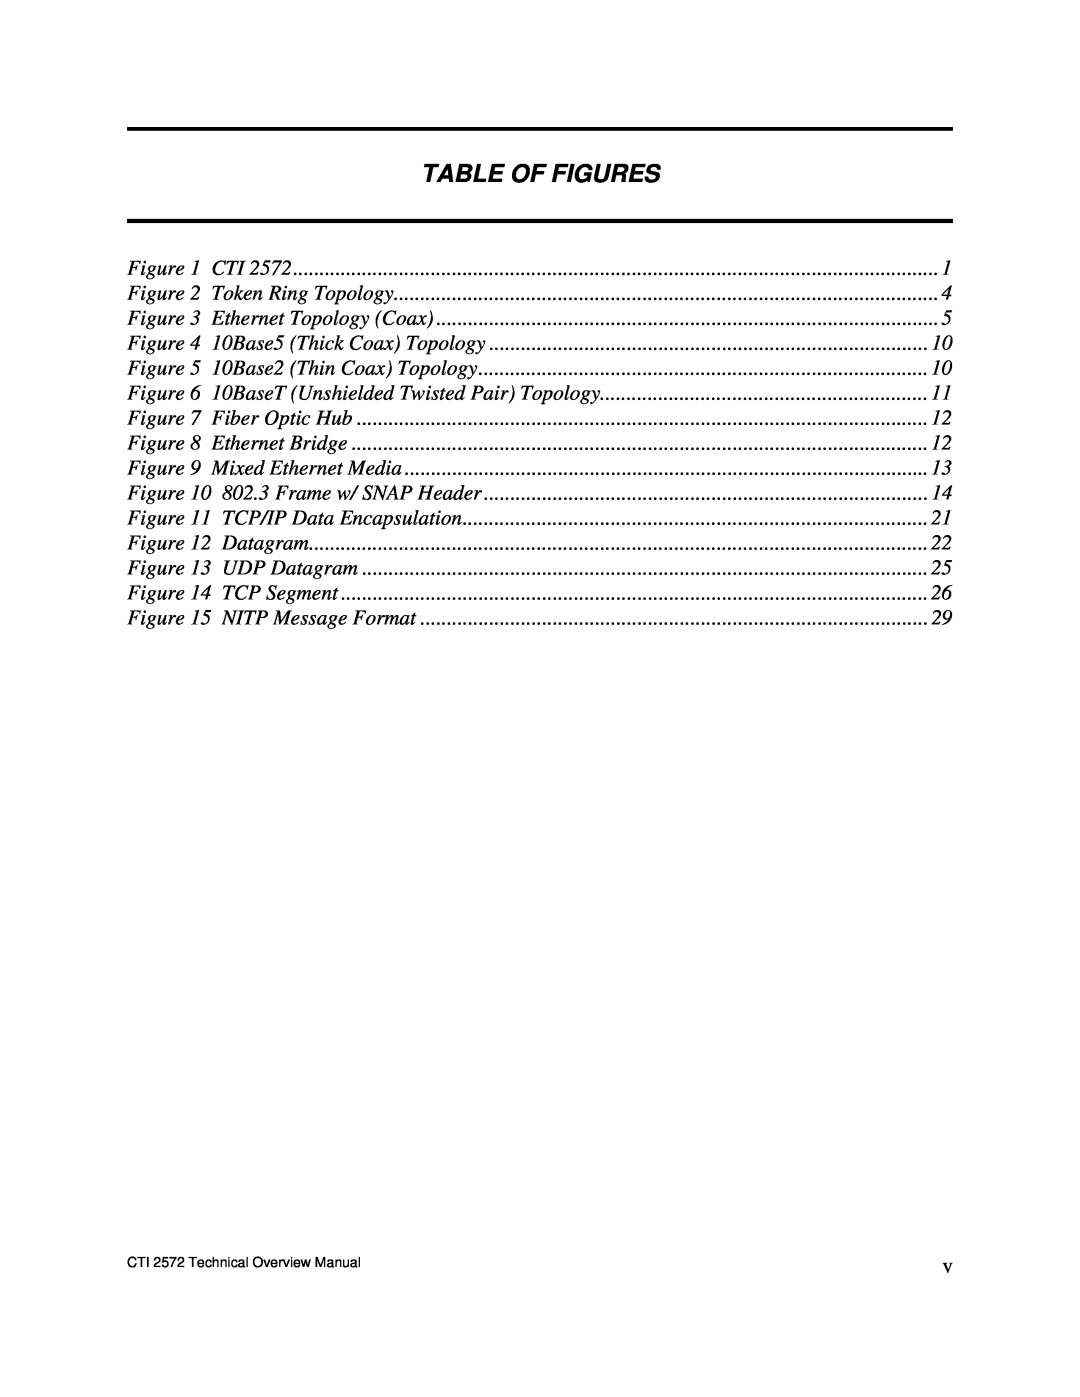 IBM CTI 2572 manual Table Of Figures 